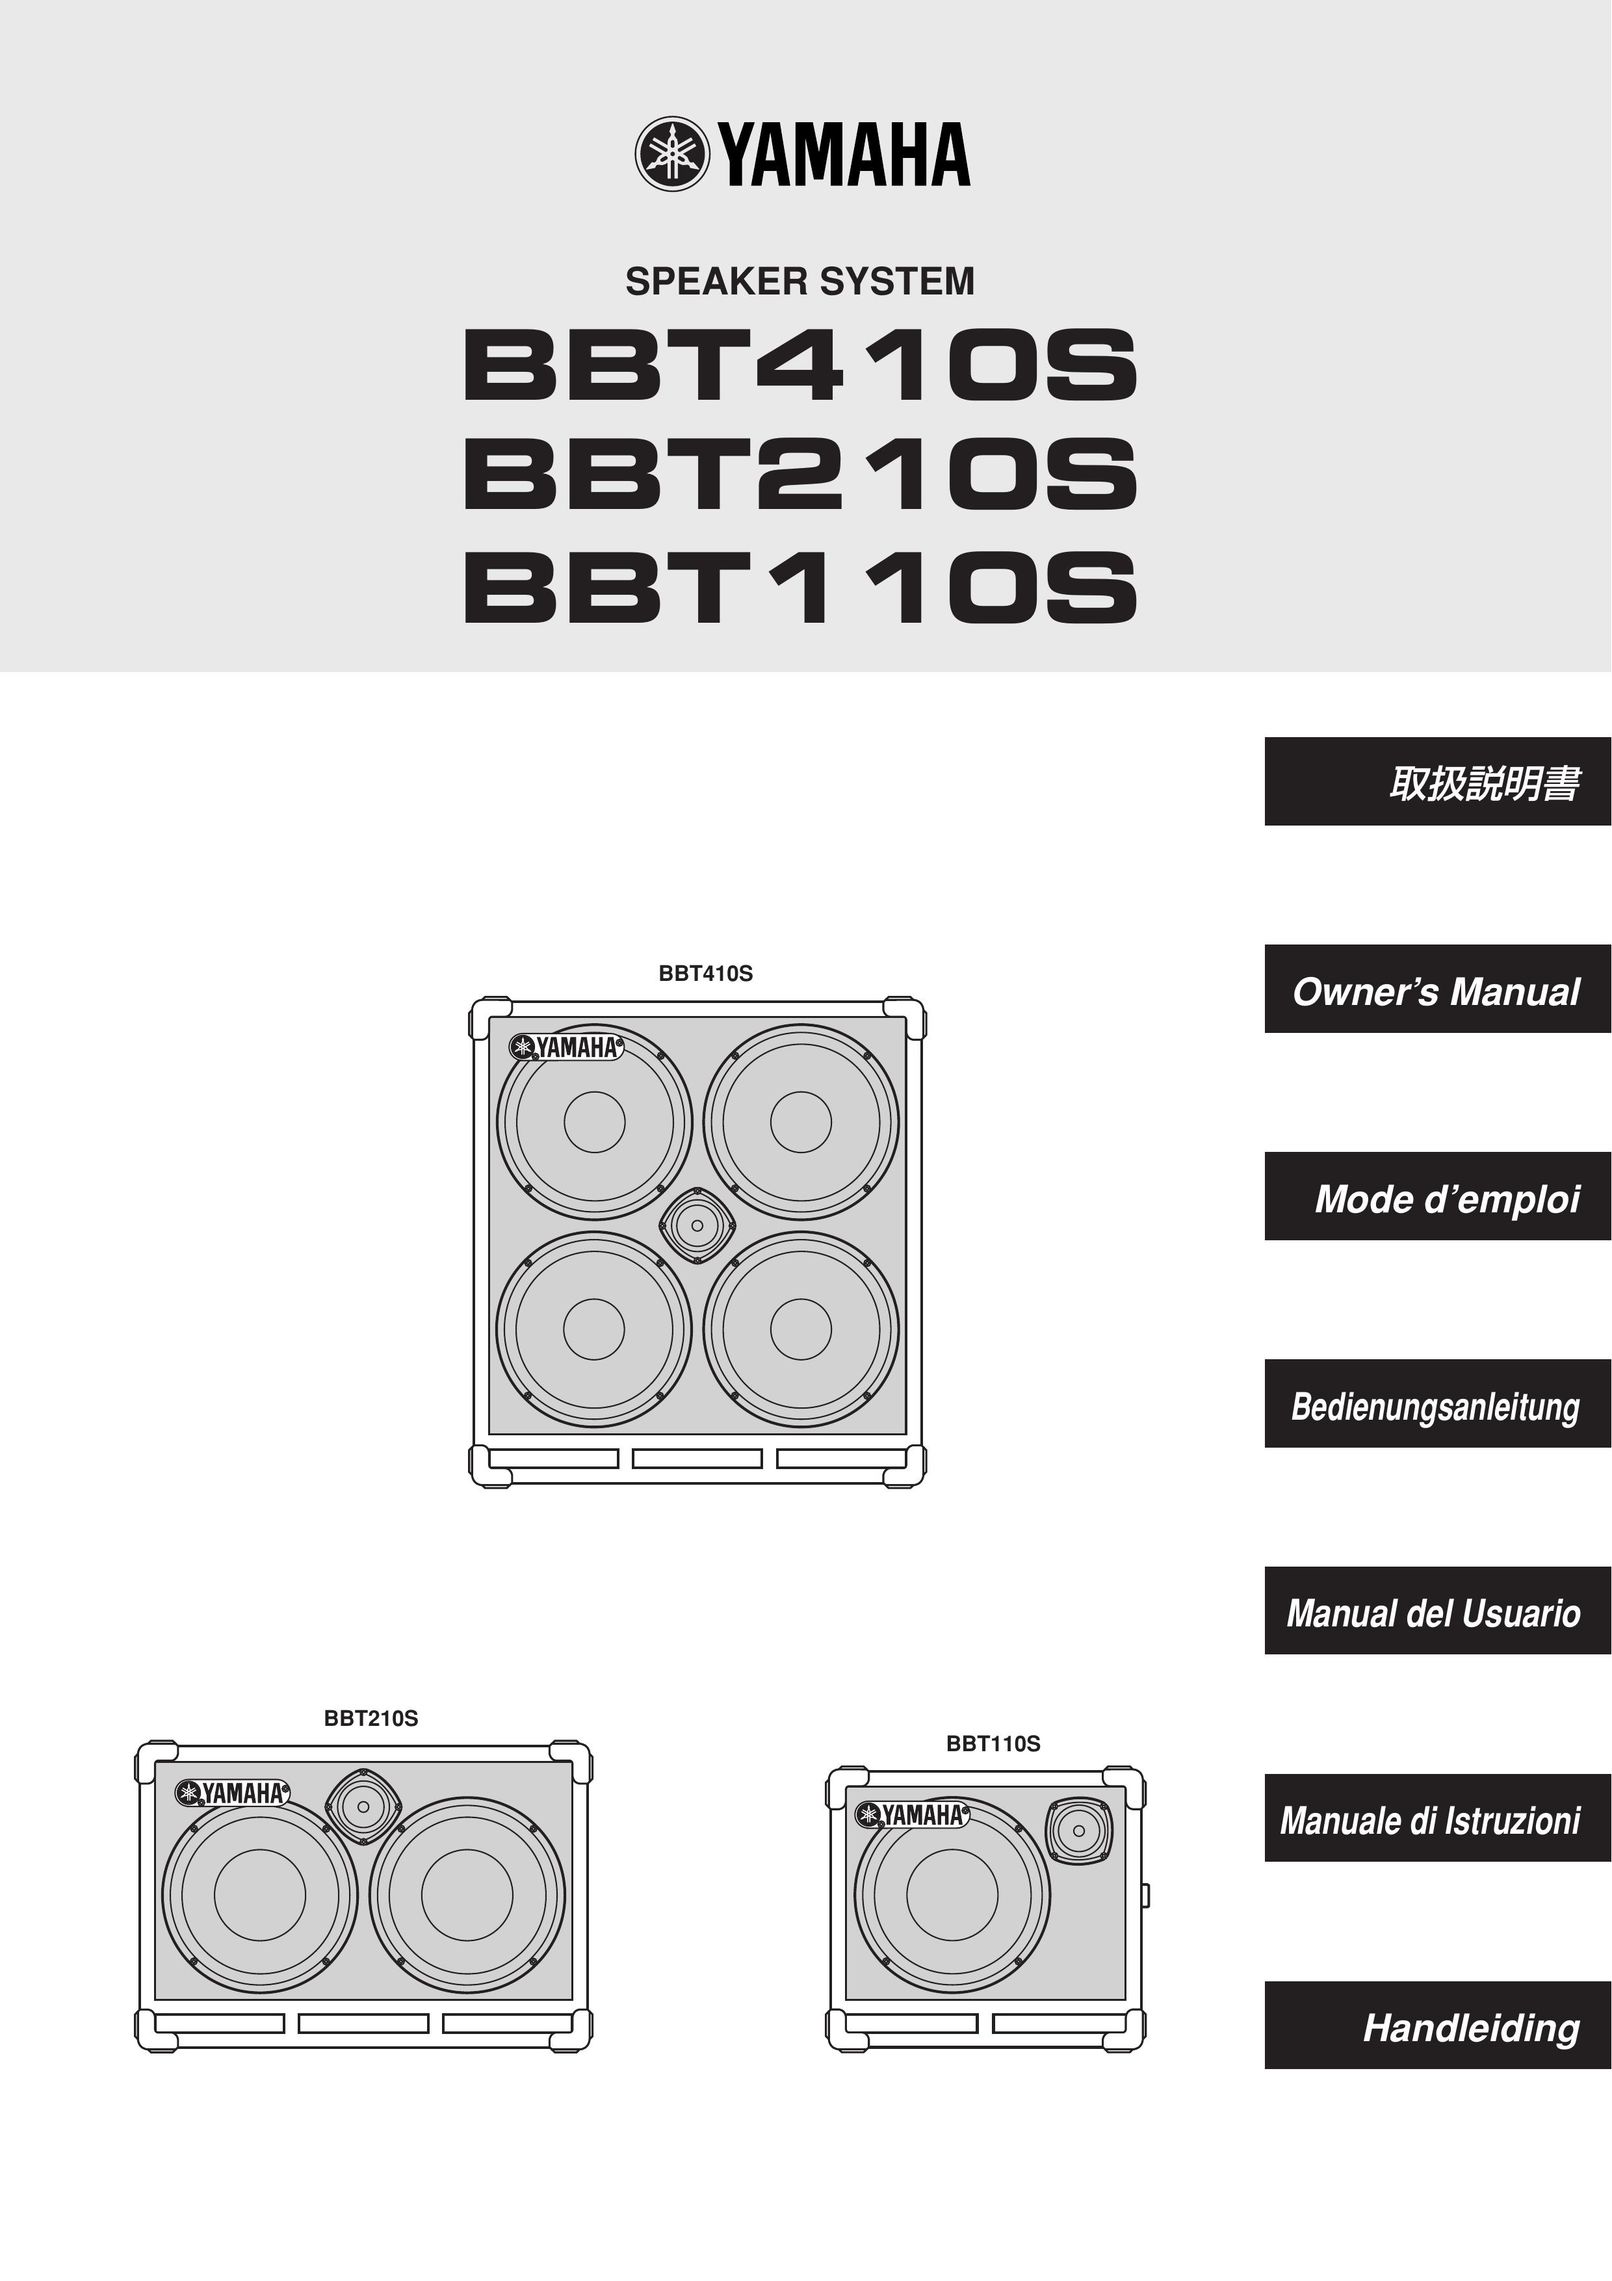 Yamaha BBT410S Speaker System User Manual